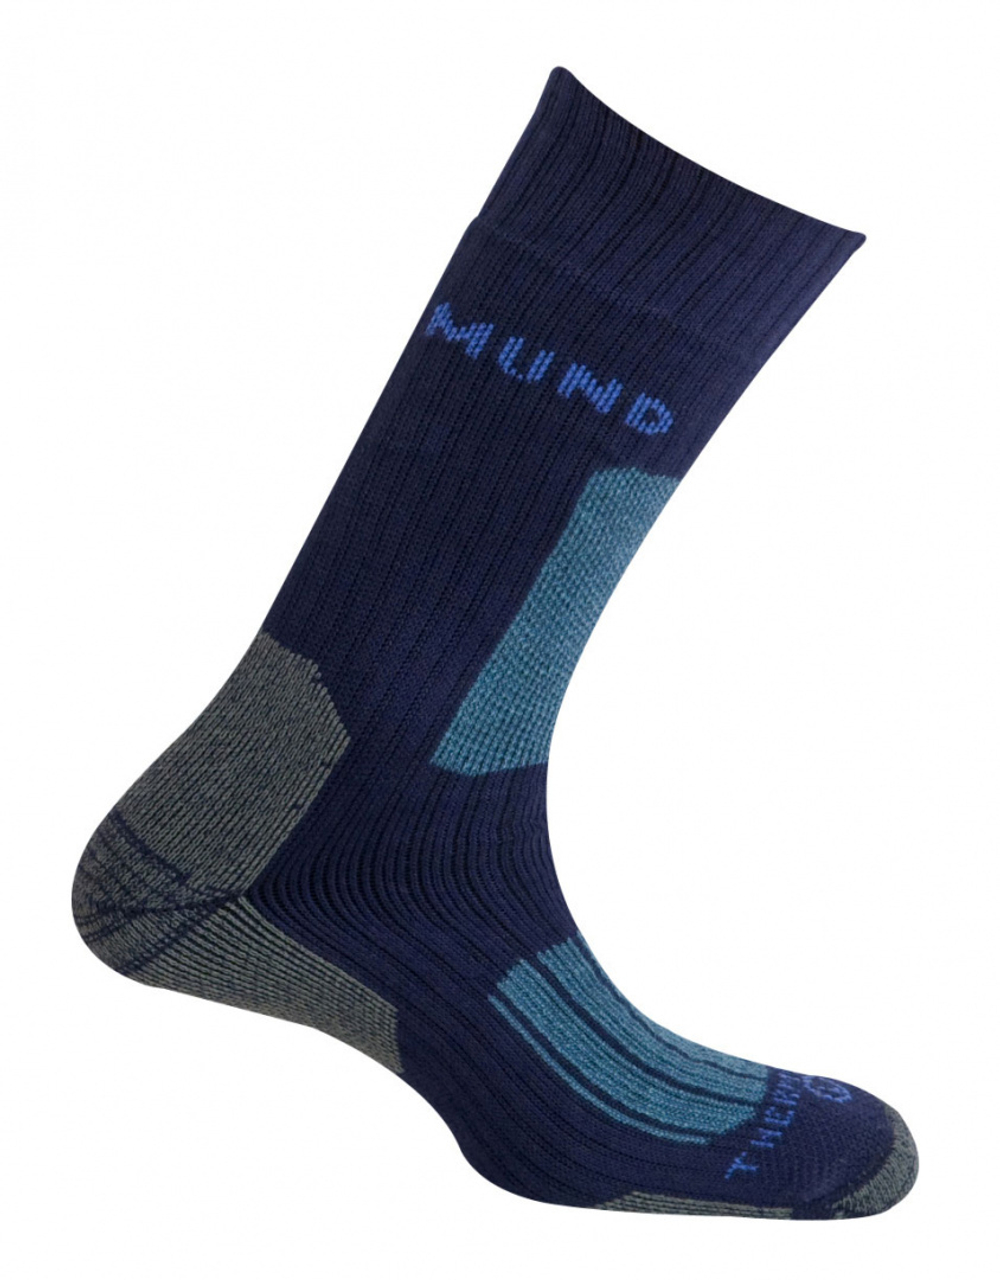 носки MUND, 403 Everest, цвет темно-синий, размер S (34-37)